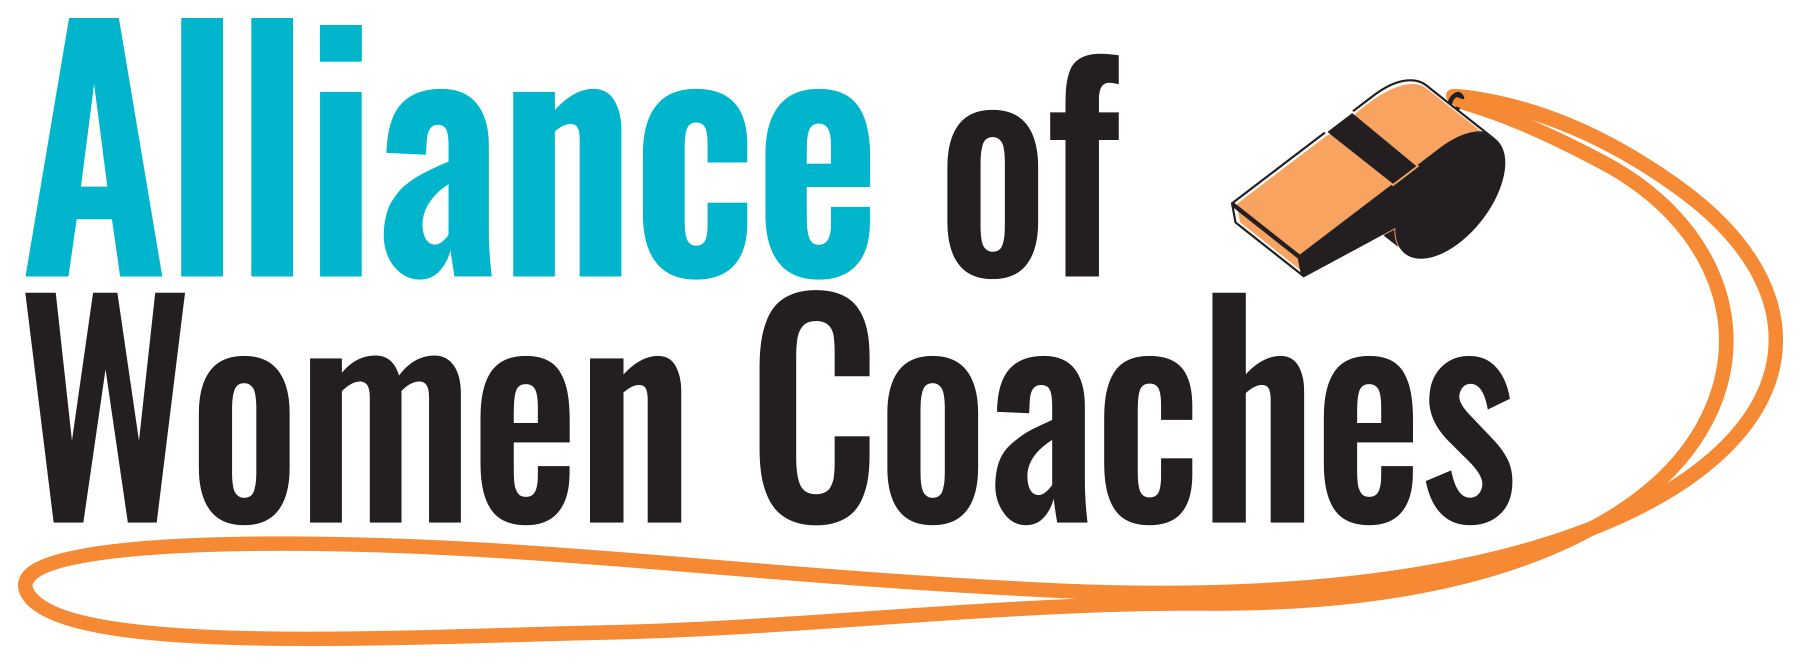 Coaches Logo - Alliance Of Women Coaches Logo Rapids Youth Soccer Club